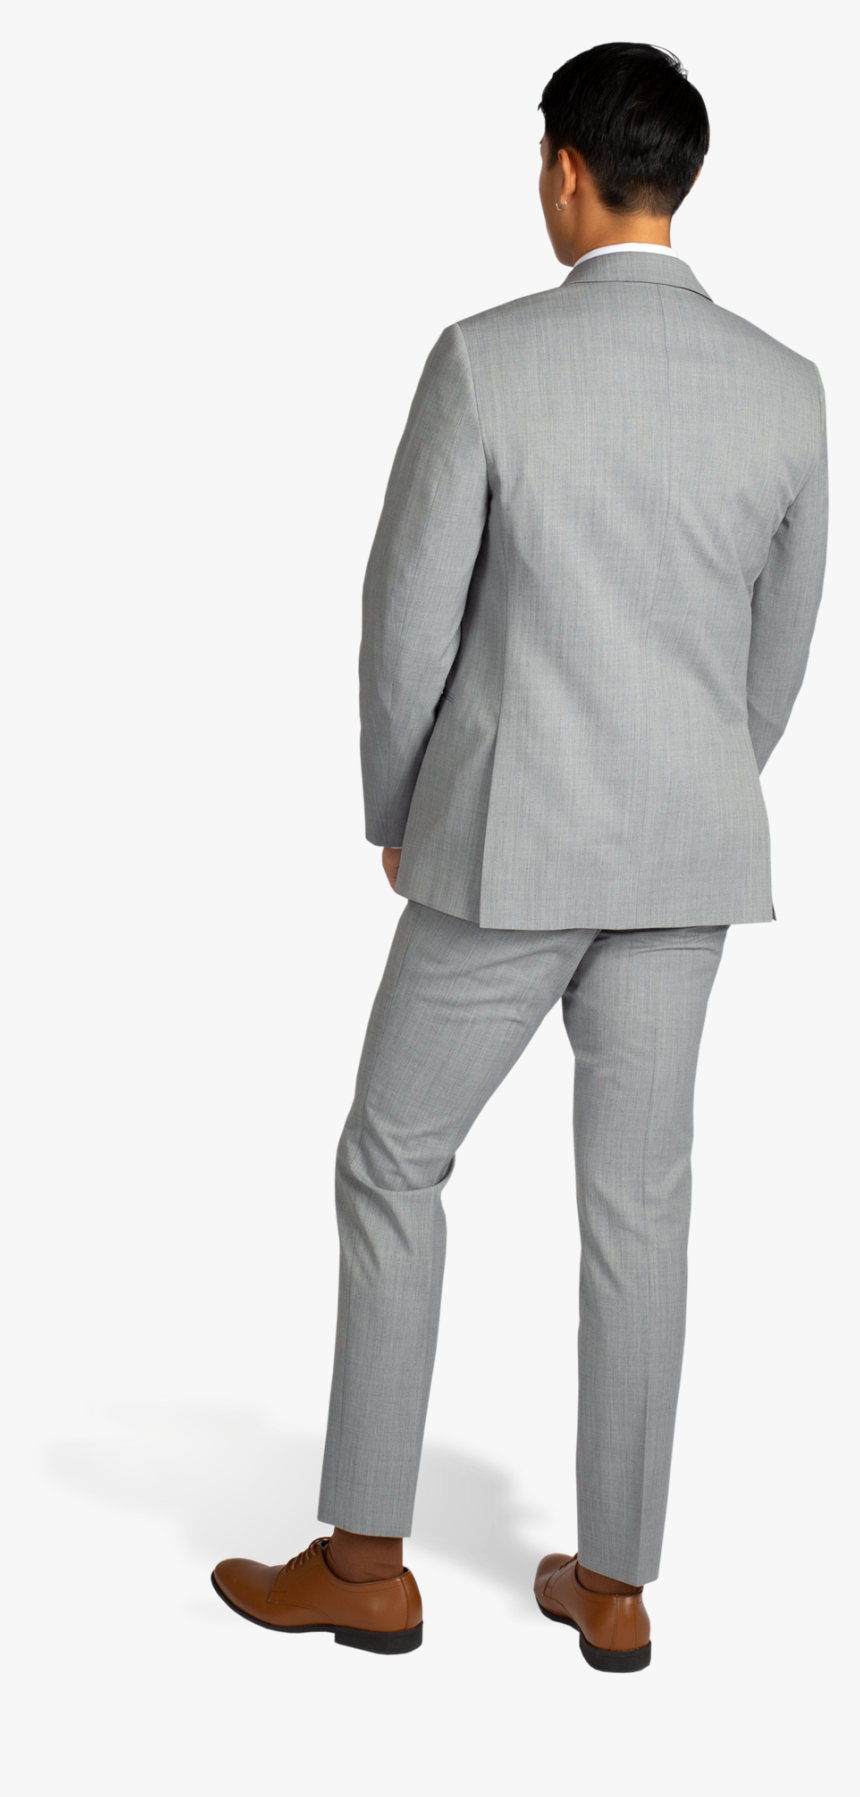 Heather Grey Performance Suit By Michael Kors - Gentleman, HD Png Download, Free Download